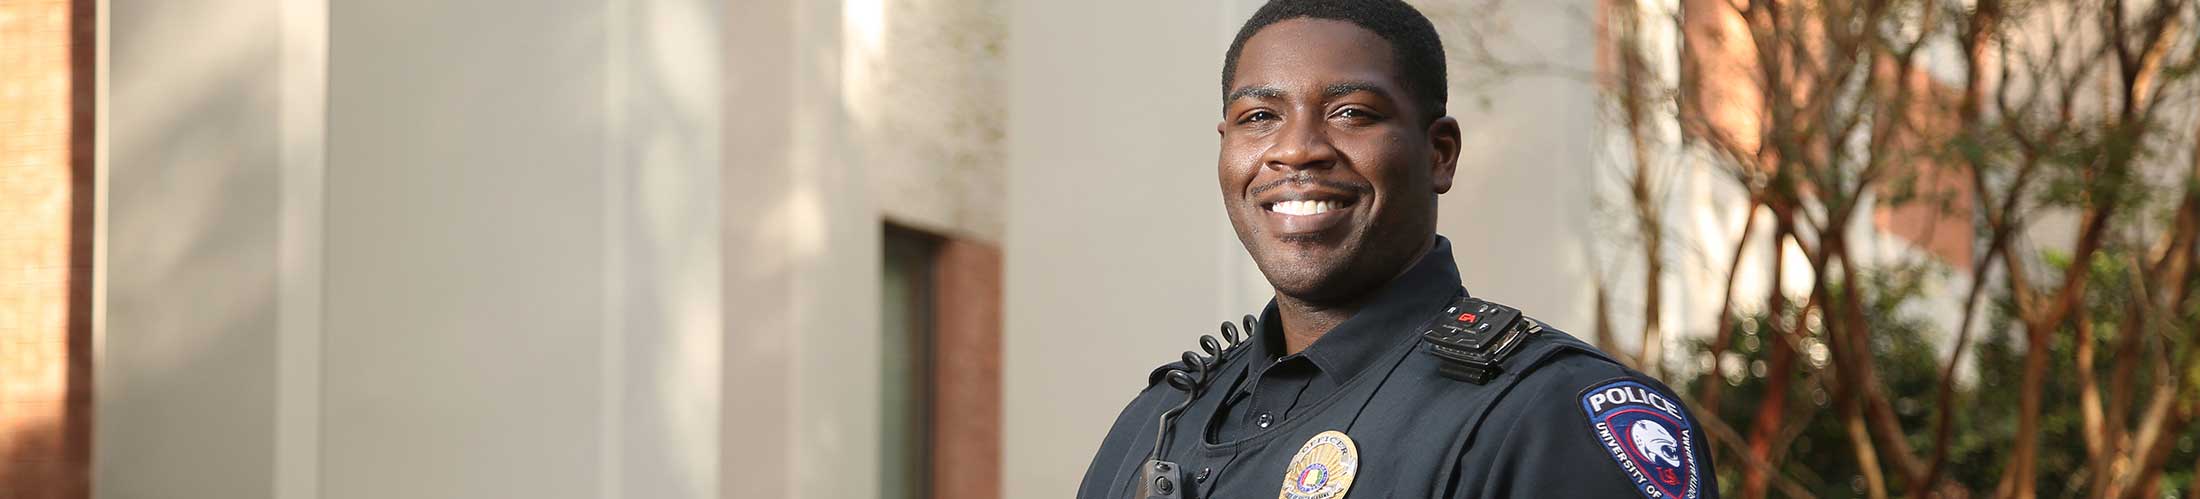 South Alabama police officer smiling outside.